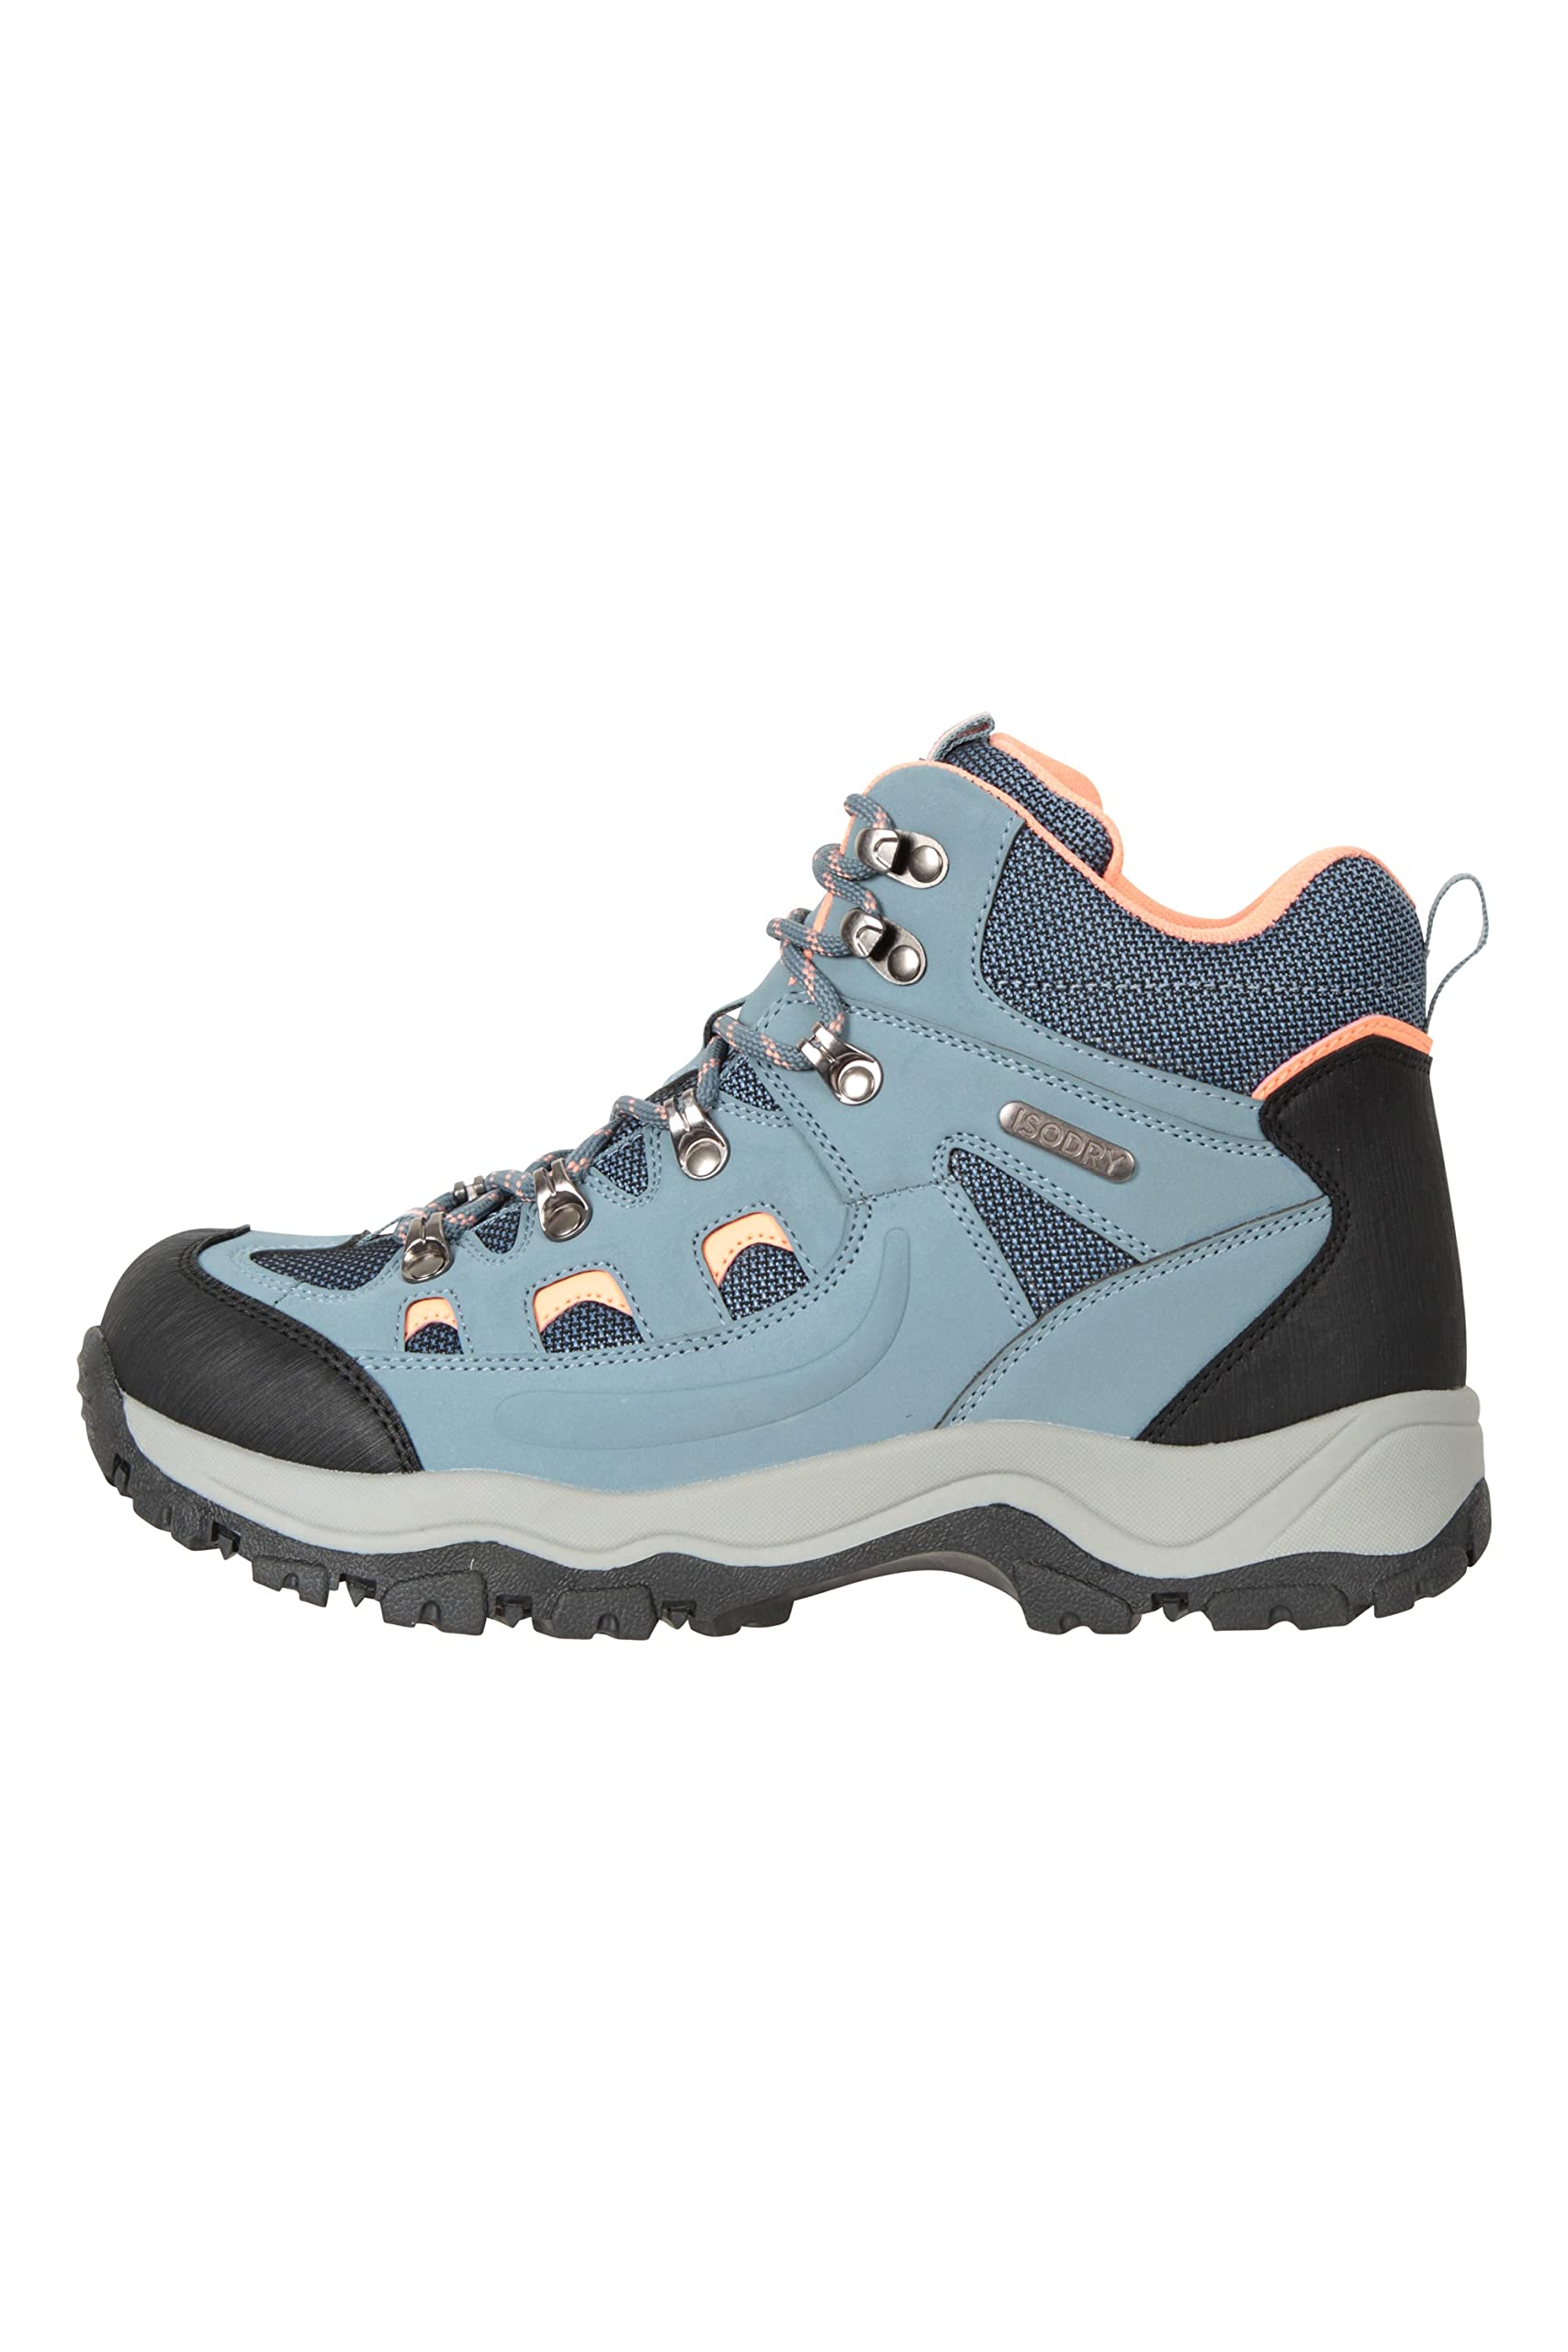 Mountain Warehouse Adventurer Womens Waterproof Hiking Boots 9 Blue